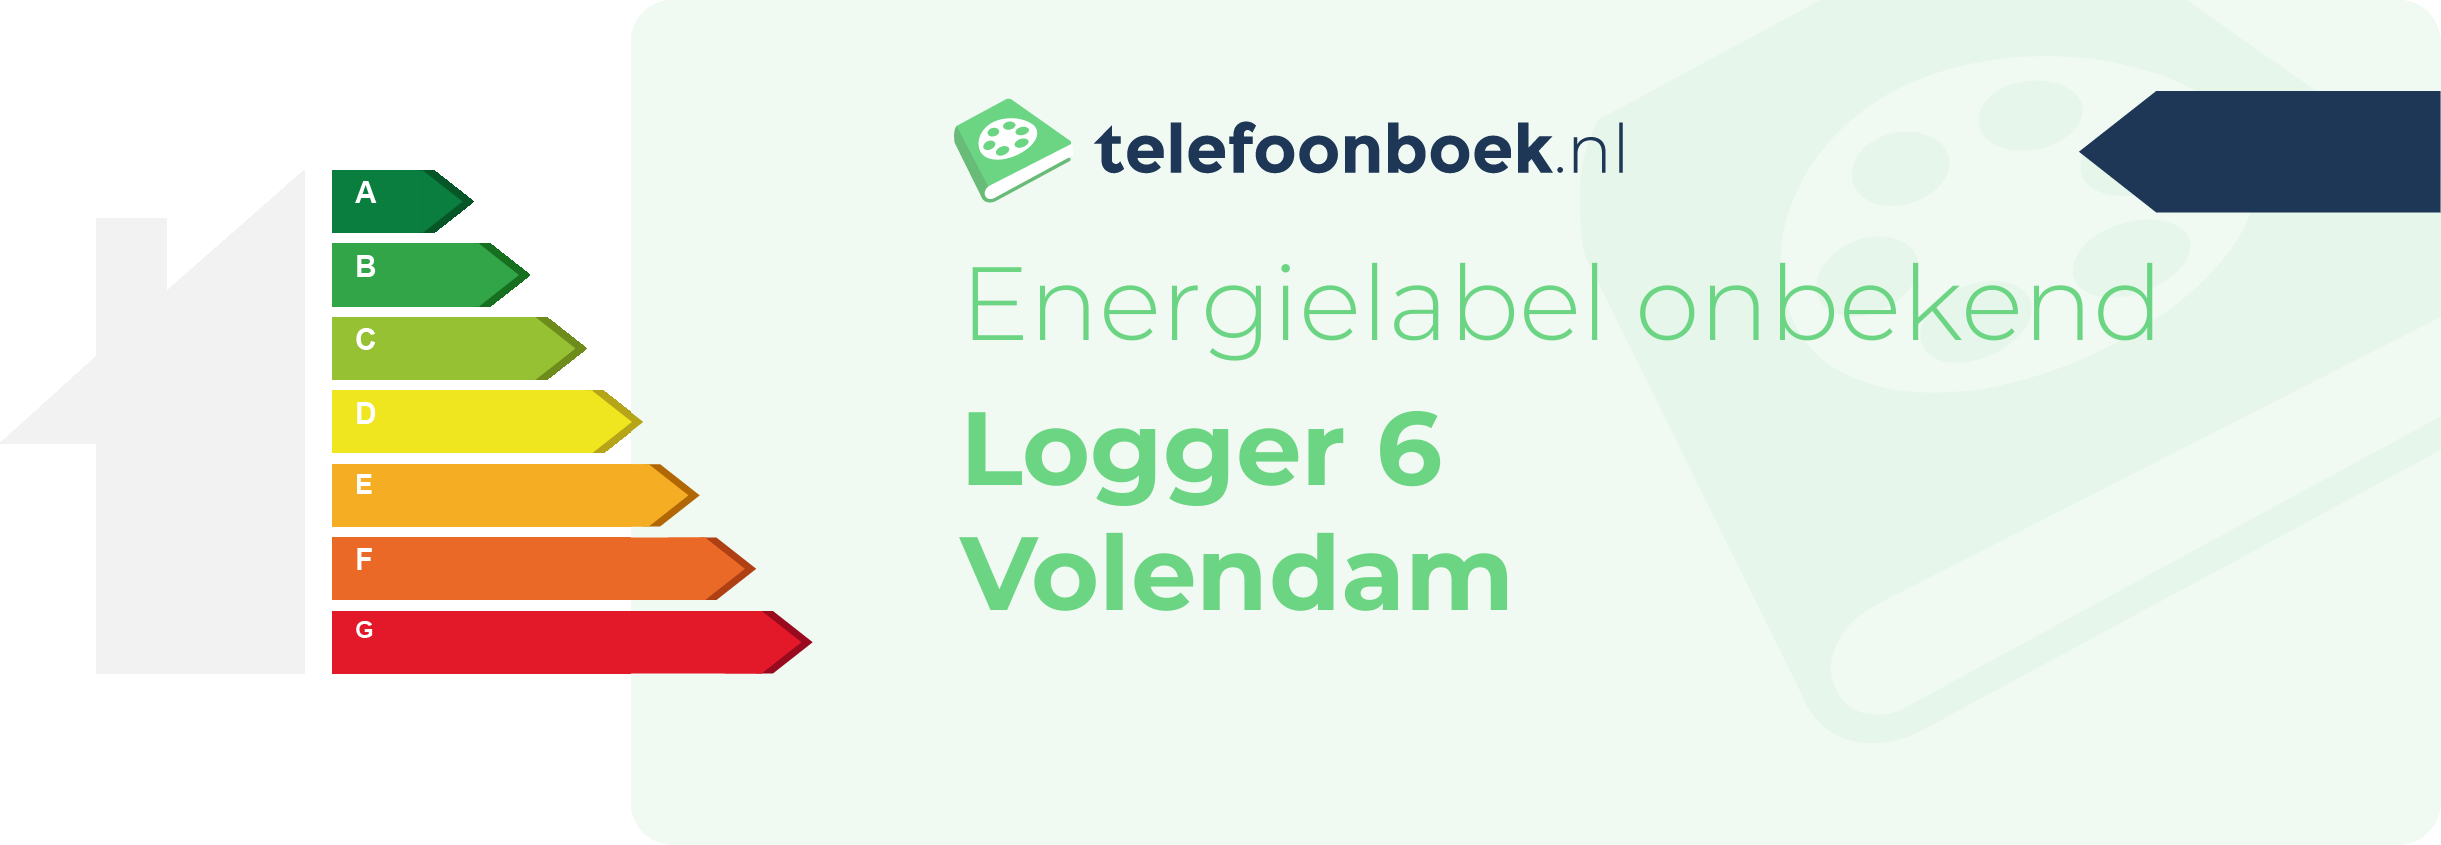 Energielabel Logger 6 Volendam